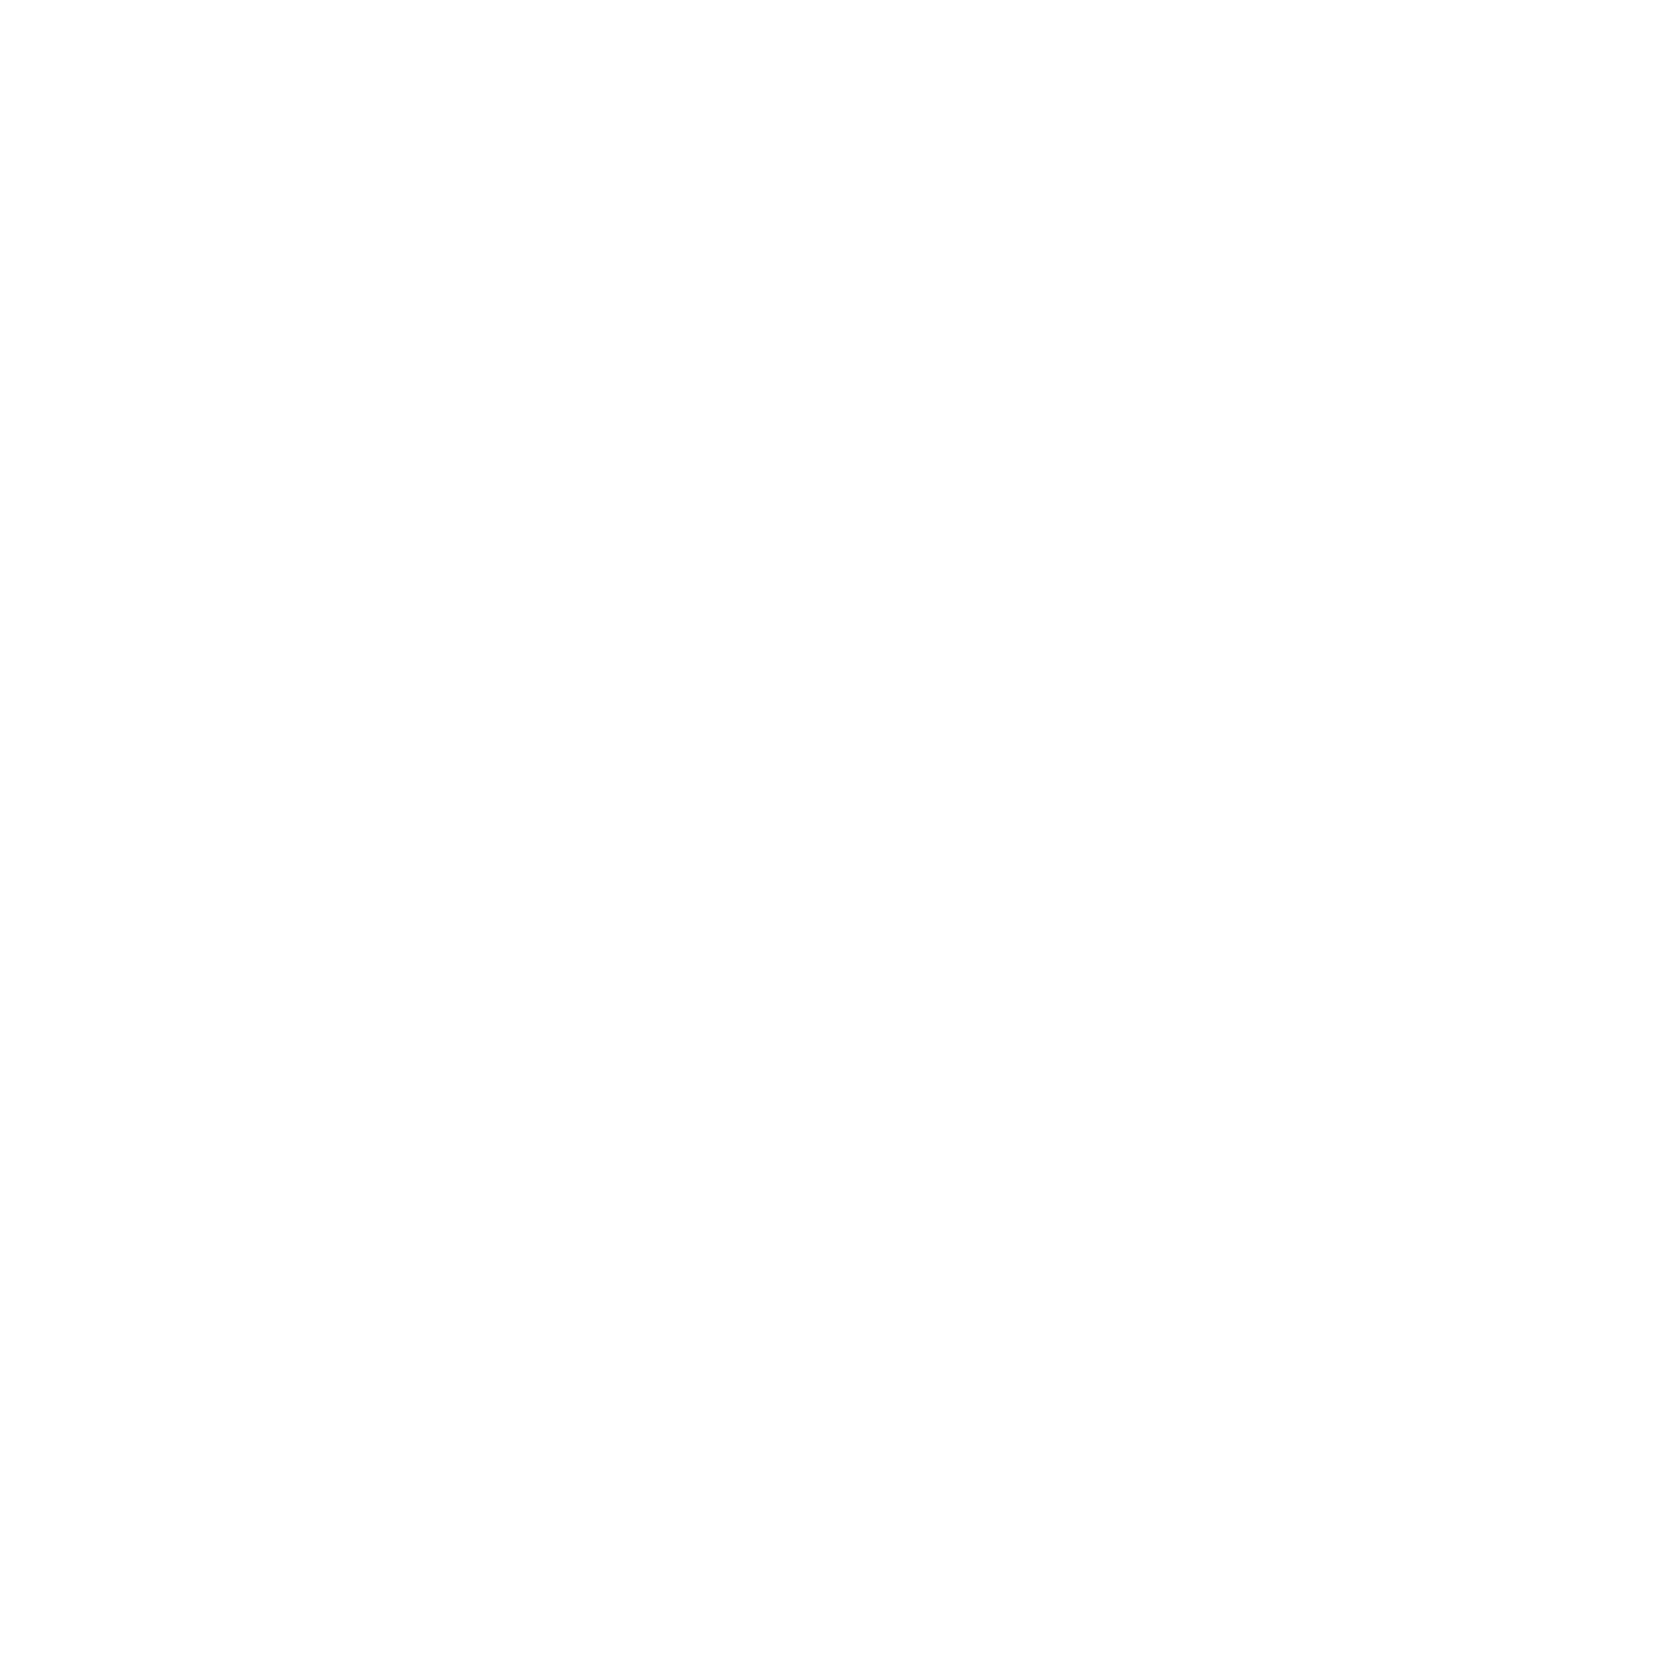 NWU - CS&amp;IS